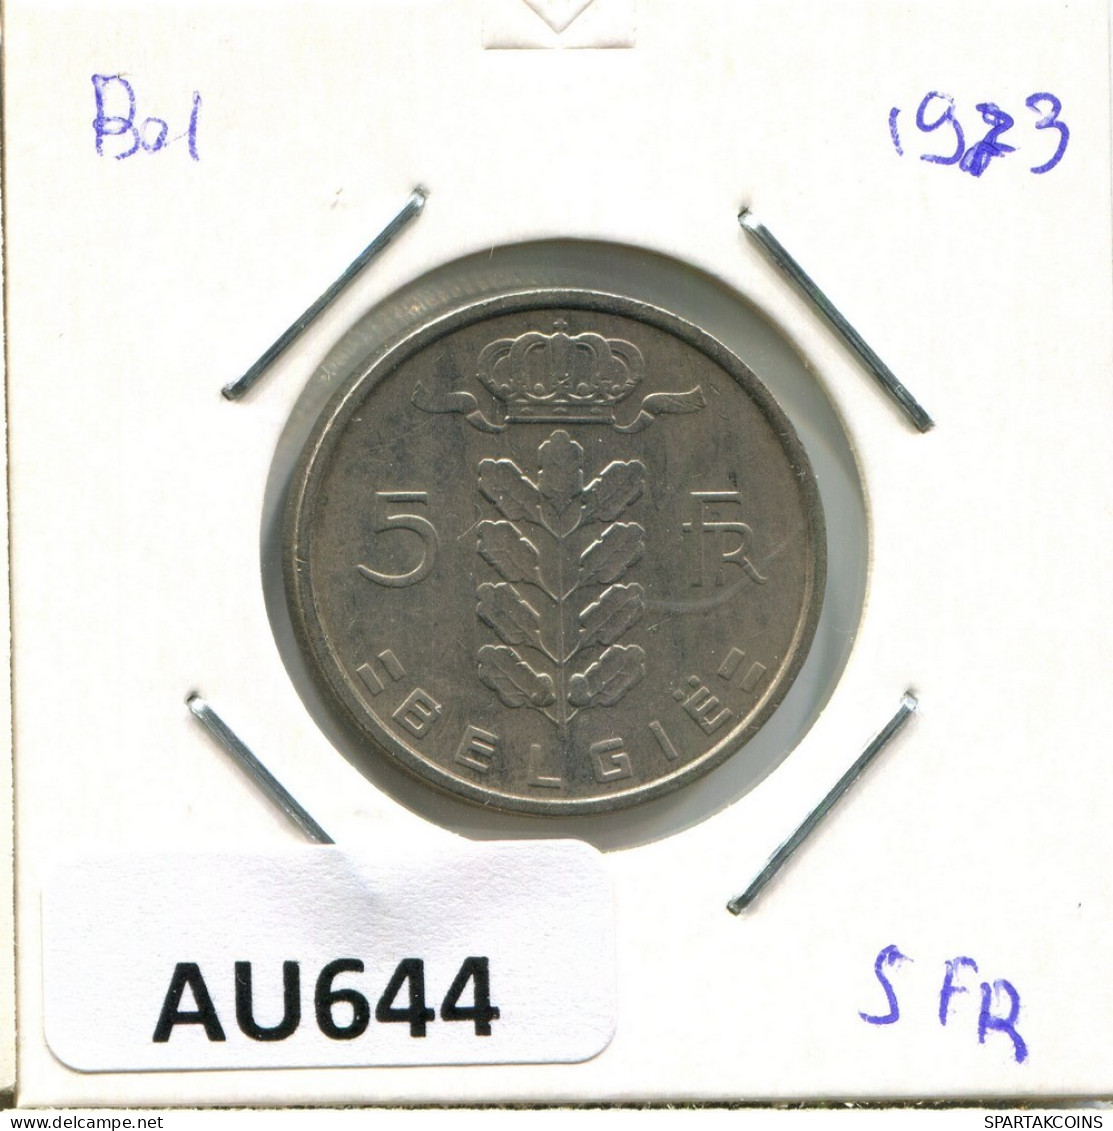 5 FRANCS 1973 DUTCH Text BELGIQUE BELGIUM Pièce #AU644.F.A - 5 Francs